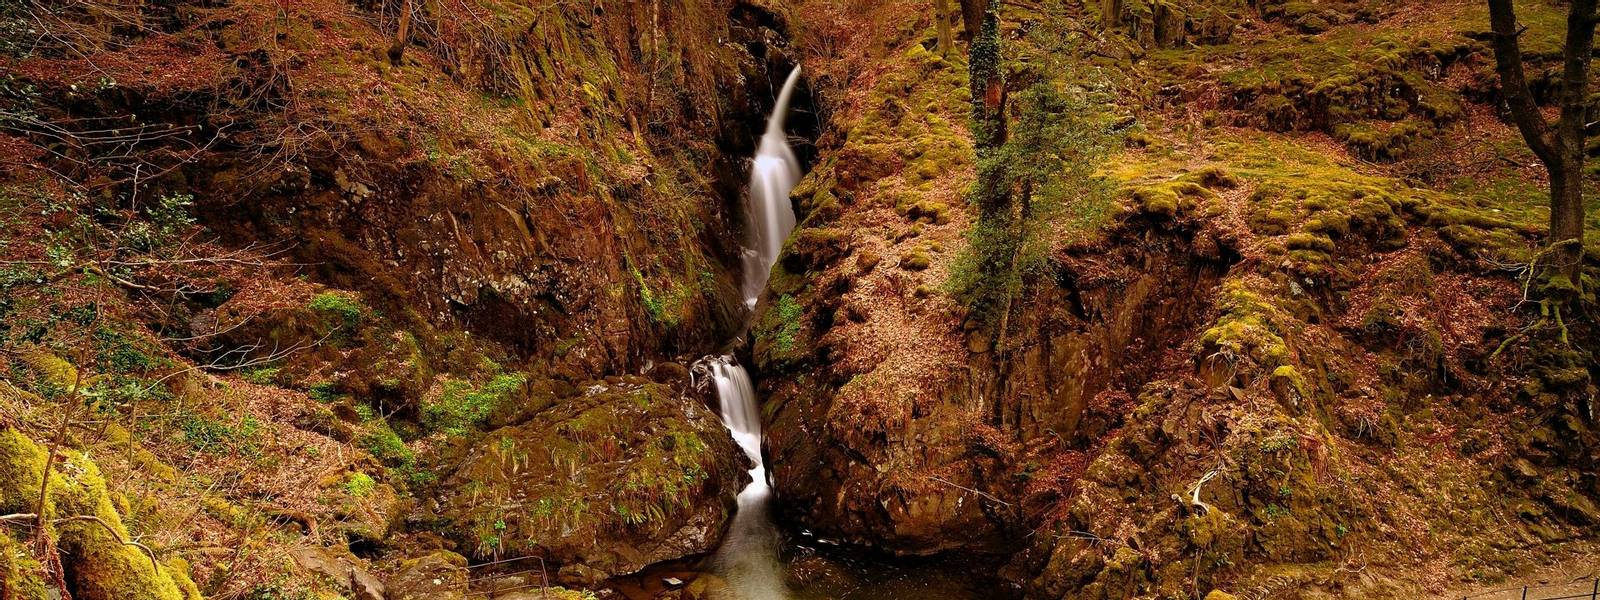 Northern Lake District - Derwent Water - Spring and Winter - AdobeStock_82182233.jpeg